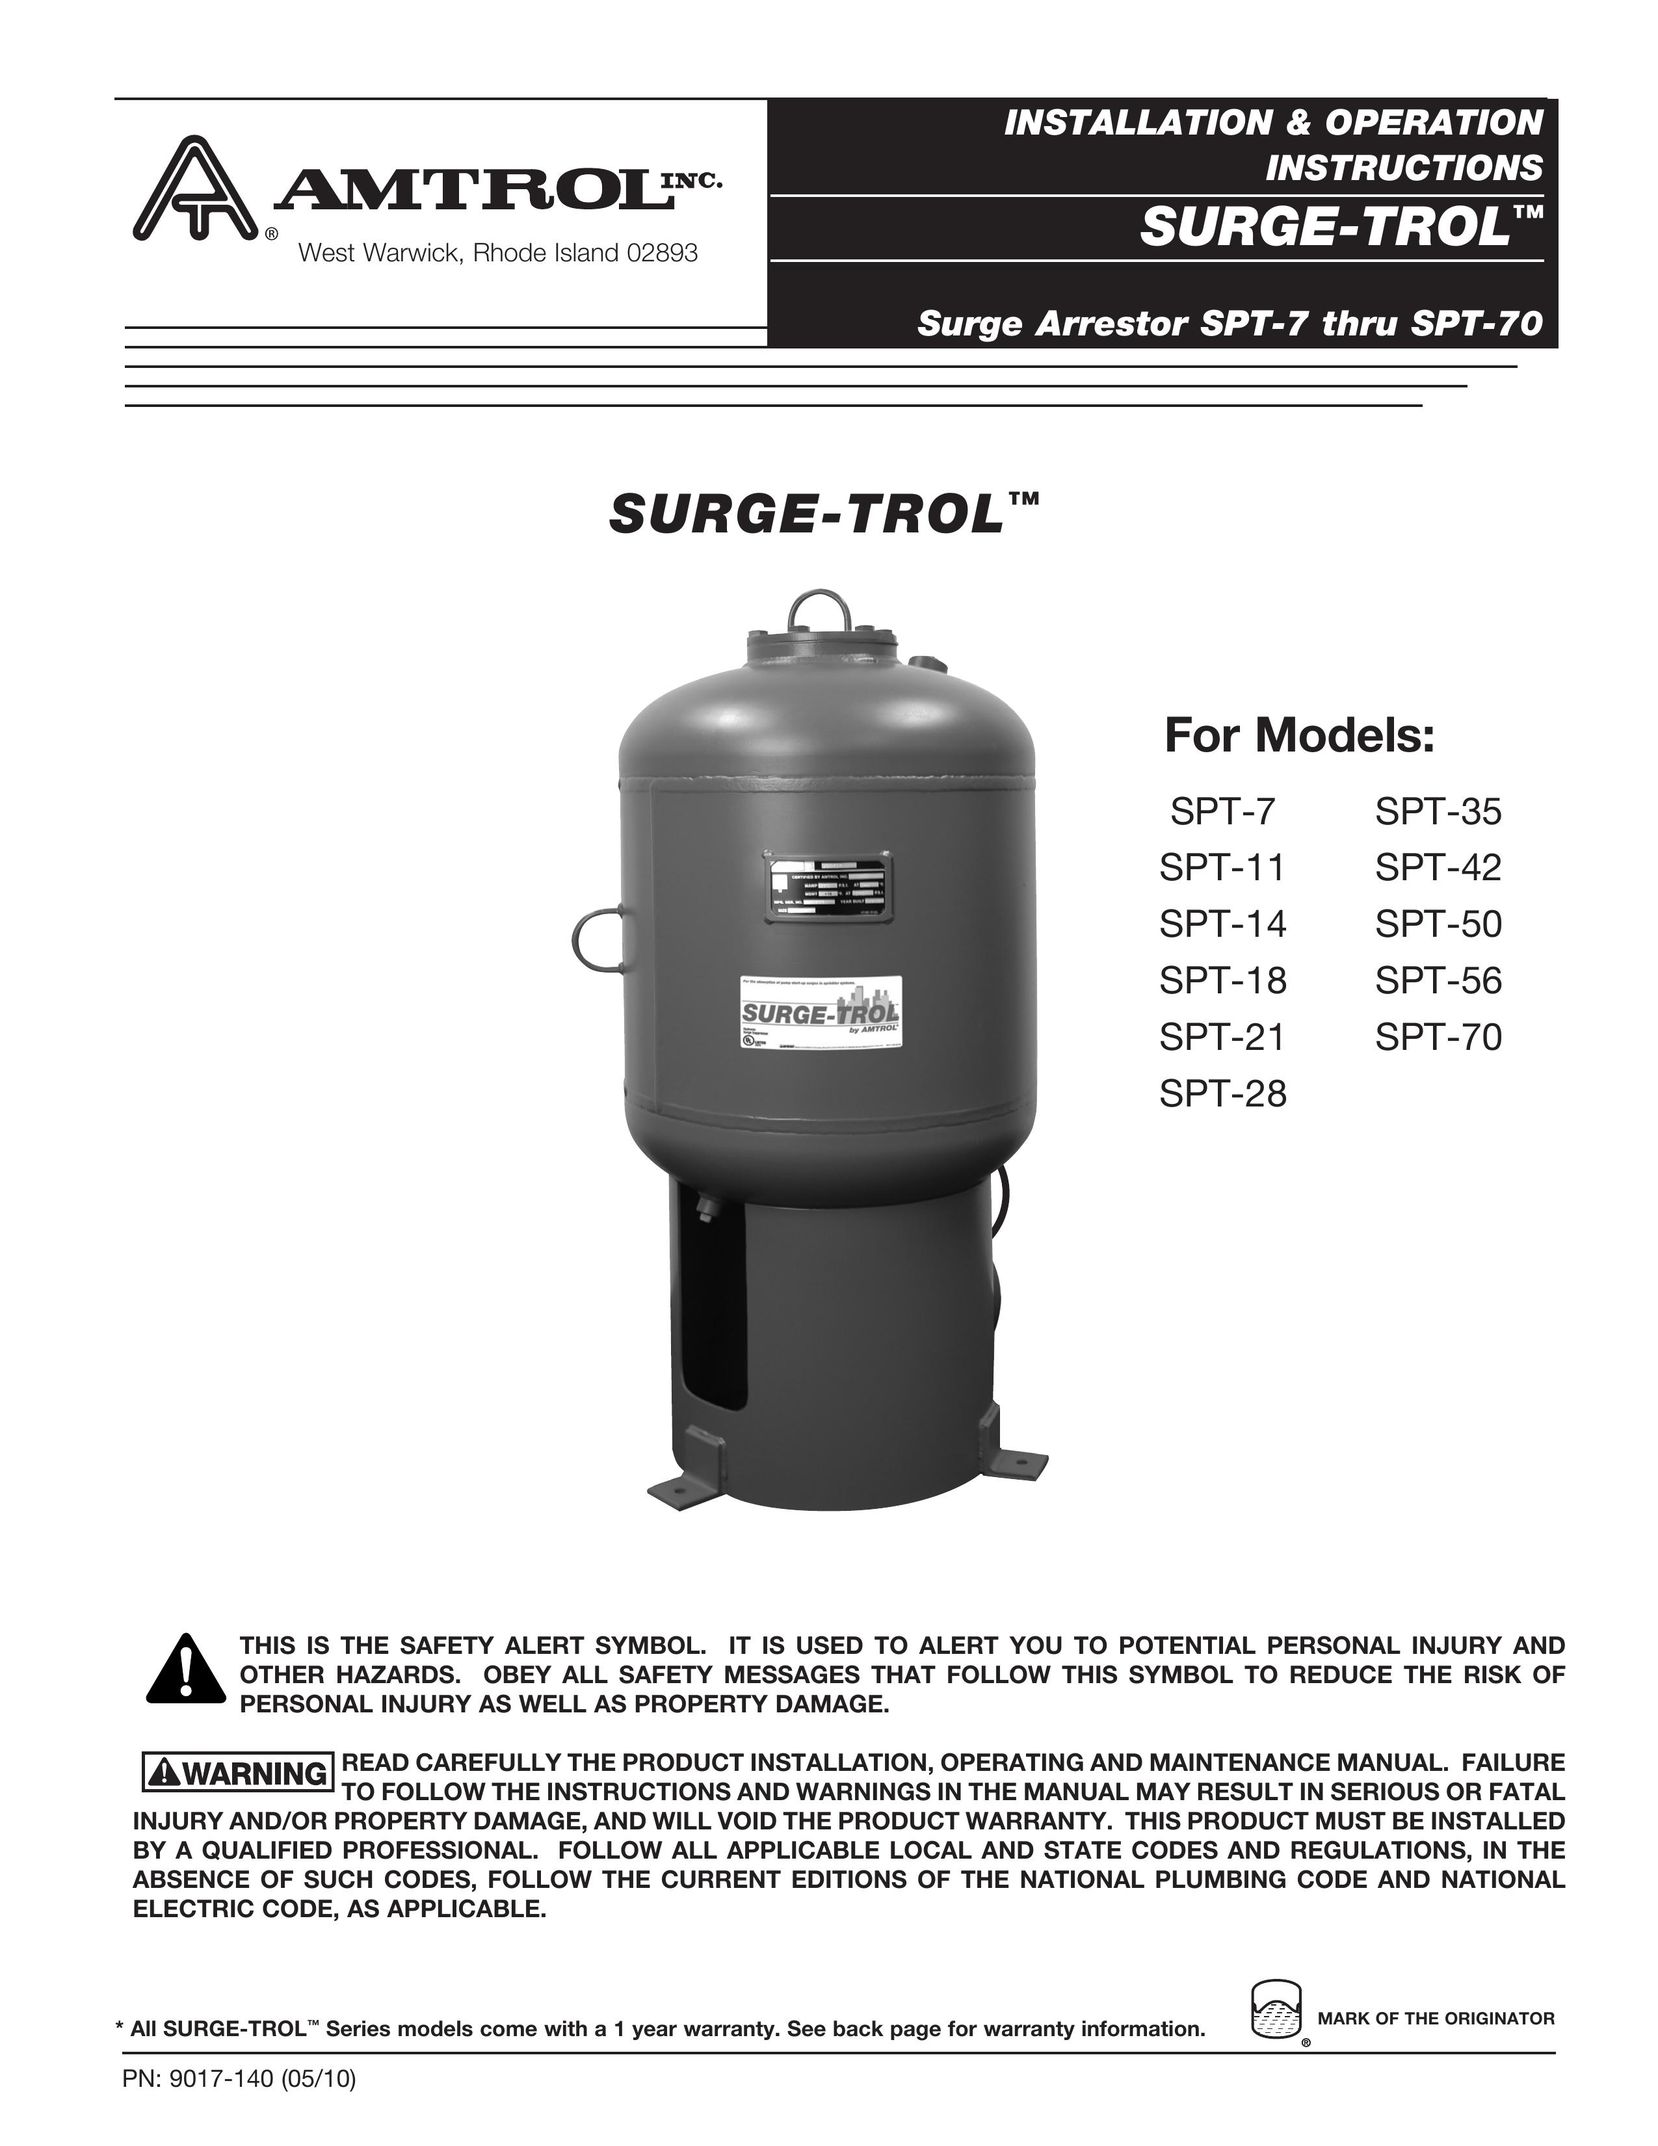 Amtrol SPT-18 Surge Protector User Manual